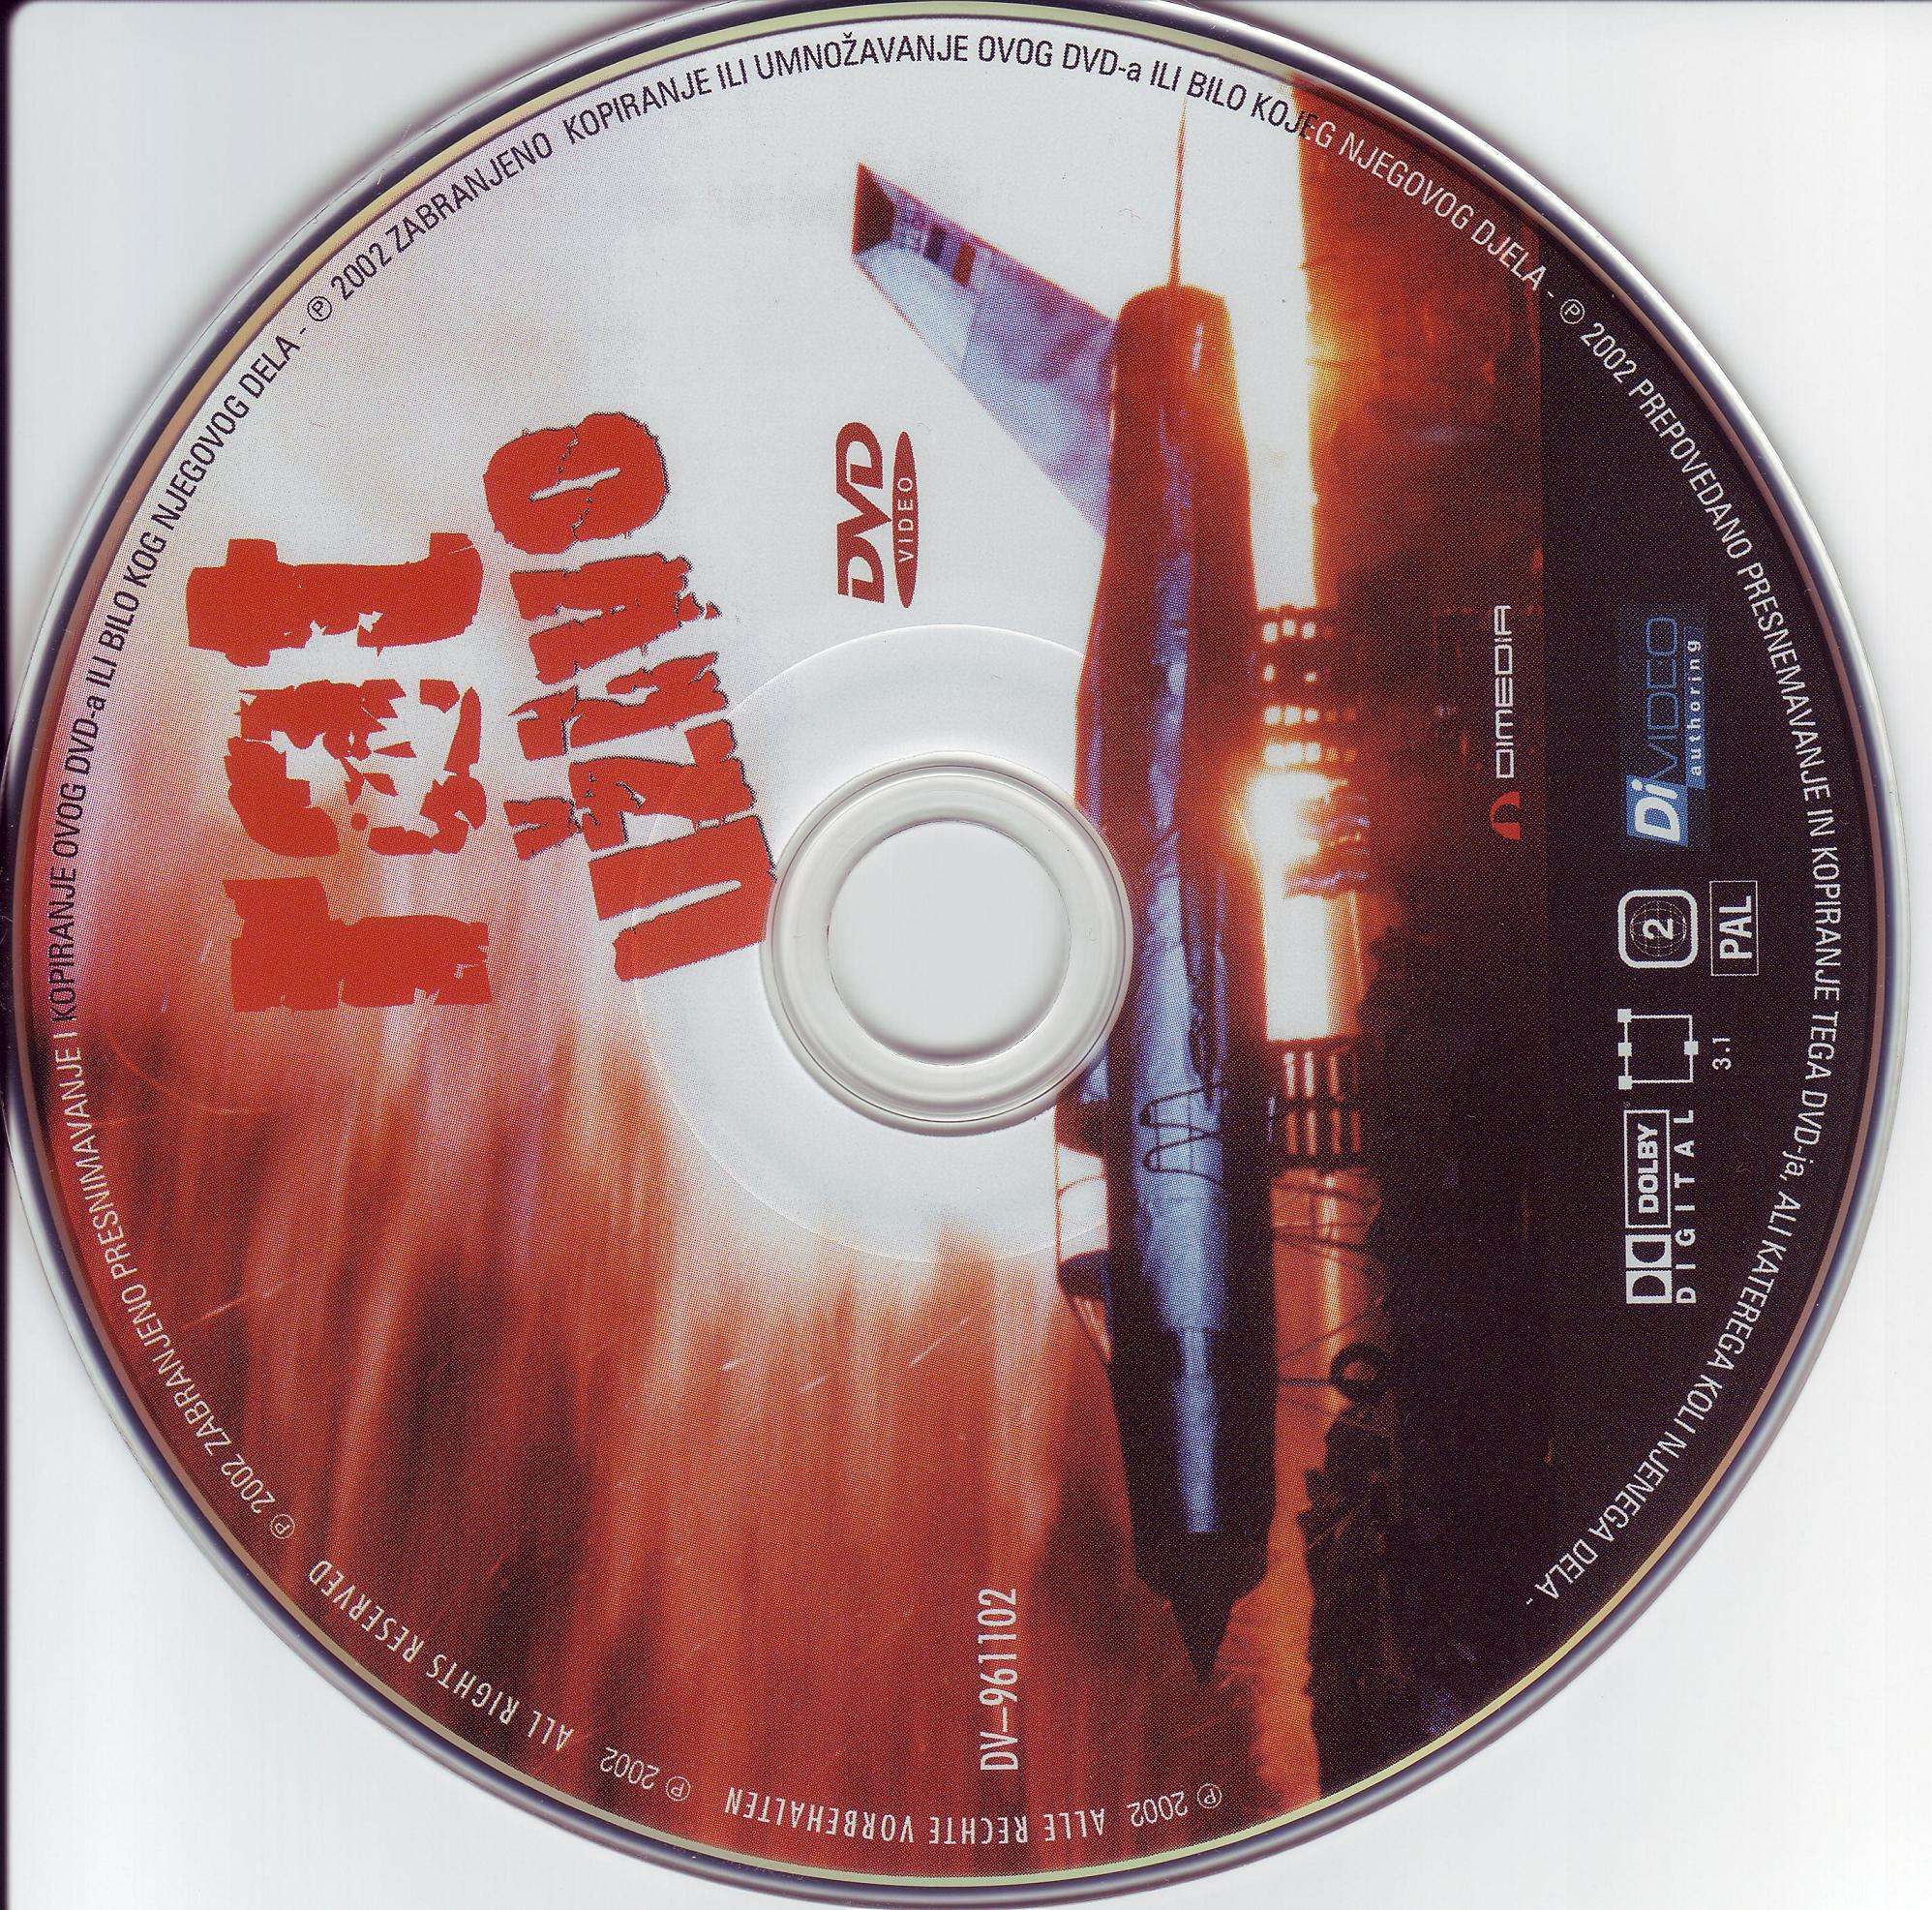 Click to view full size image -  DVD Cover - R - DVD - RAT UZIVO - CD - DVD - RAT UZIVO - CD.JPG